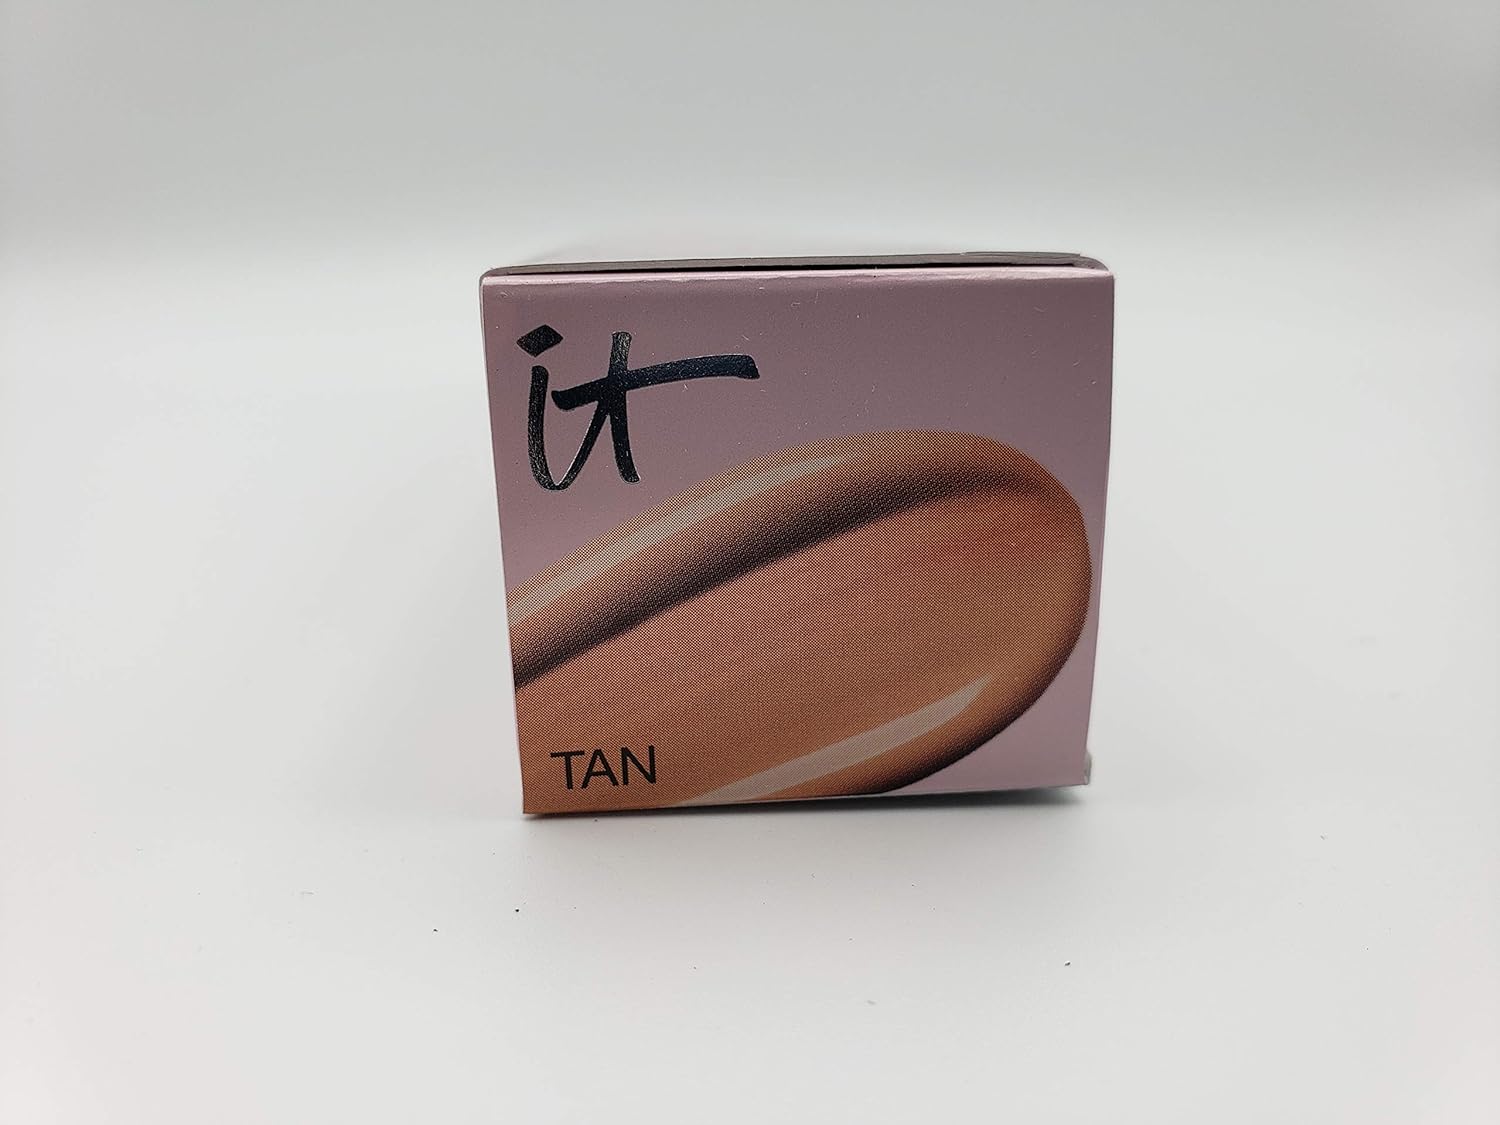  IT Cosmetics Your Skin But Better CC+ Illumination - Tan (Super-Size)